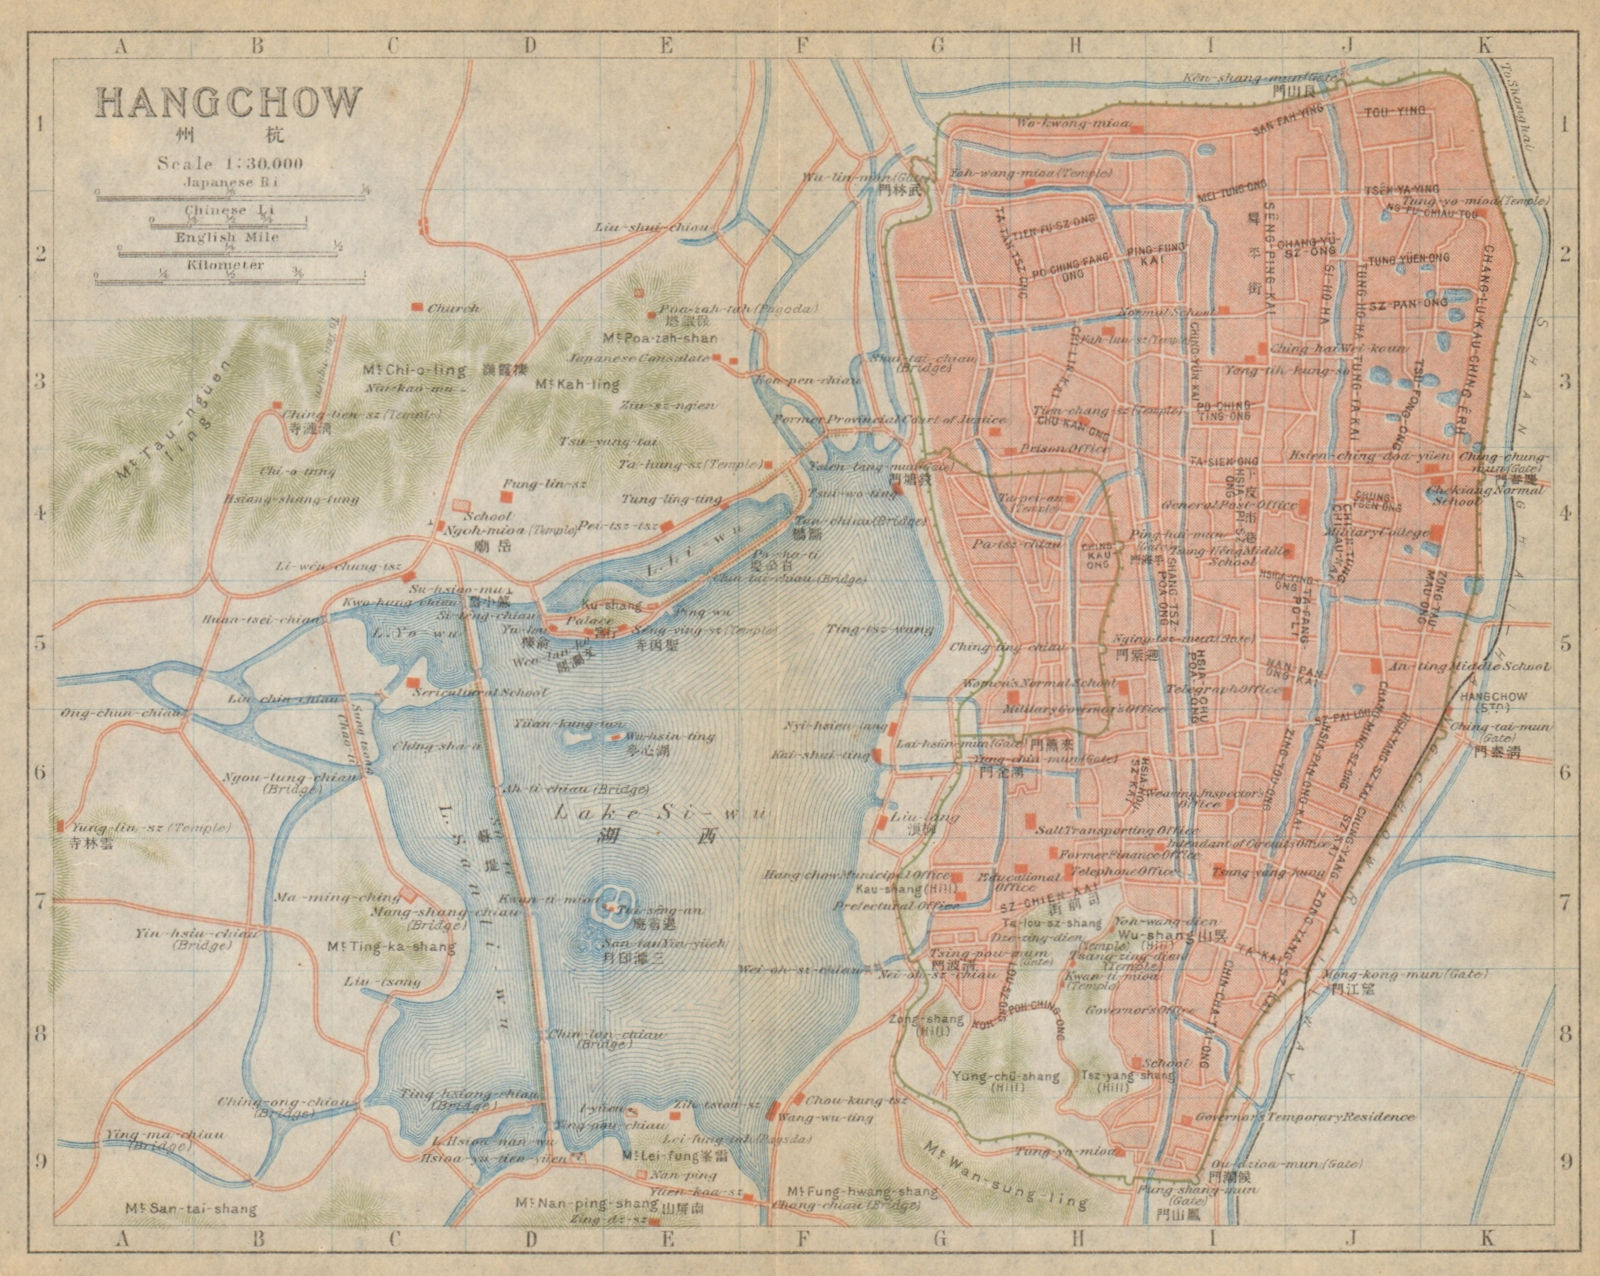 Associate Product 'Hangchow'. Hangzhou antique town city plan. China 1915 old map chart